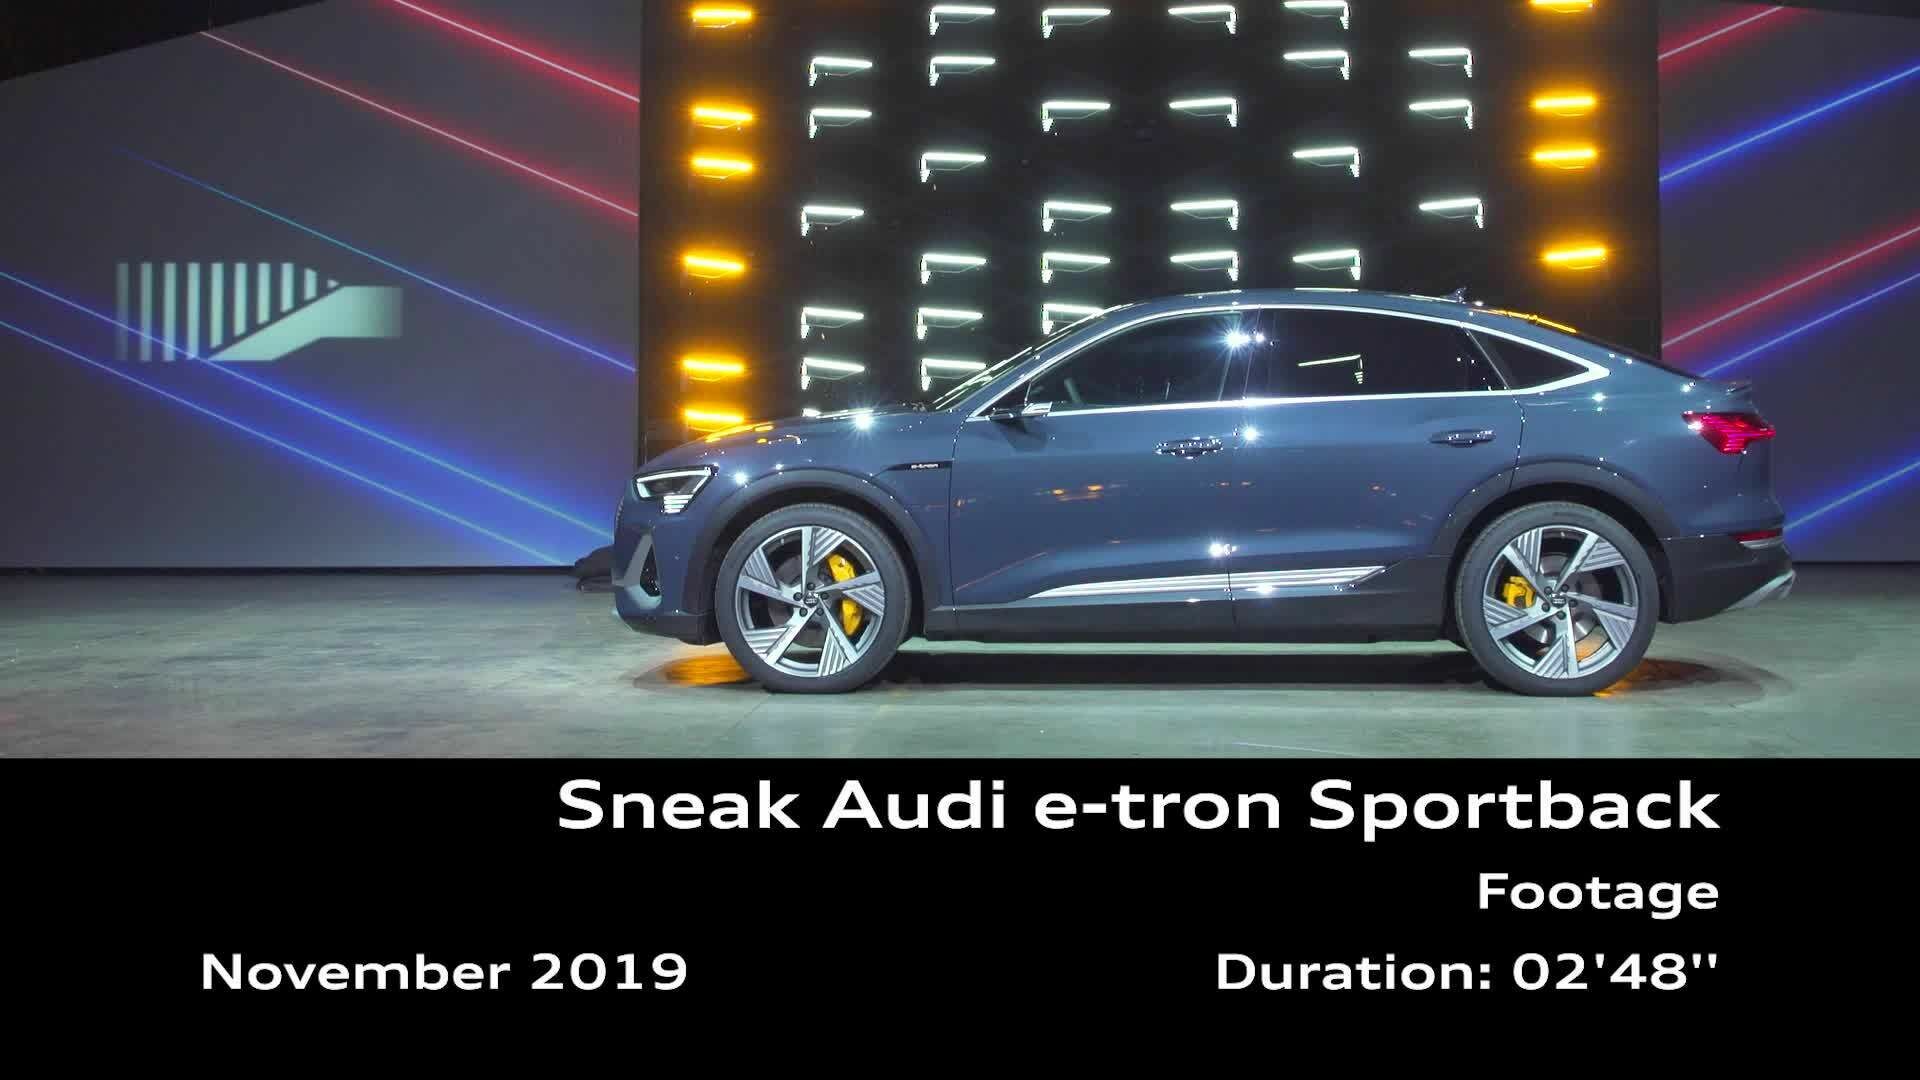 Footage: Sneak Preview of the Audi e-tron Sportback